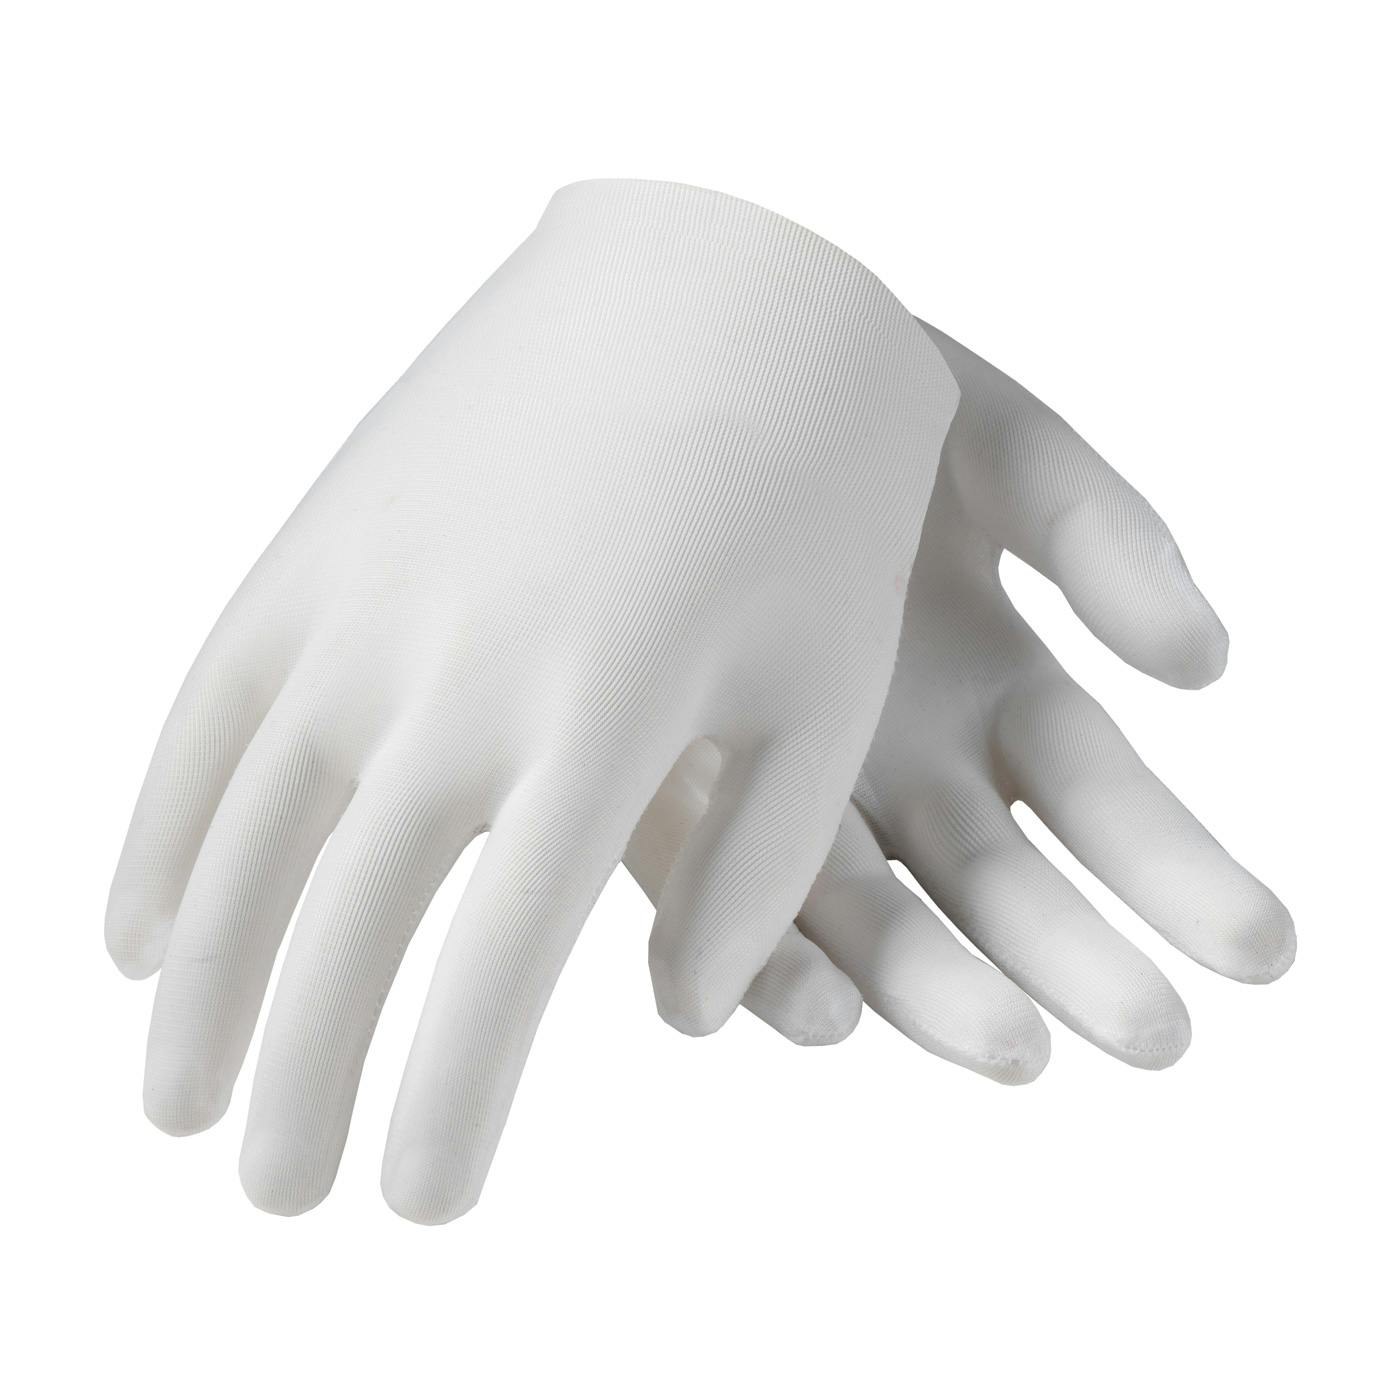 Medium Weight Cotton Lisle Inspection Glove with Overcast Hem Cuff - Men's, White (97-520H) - MENS